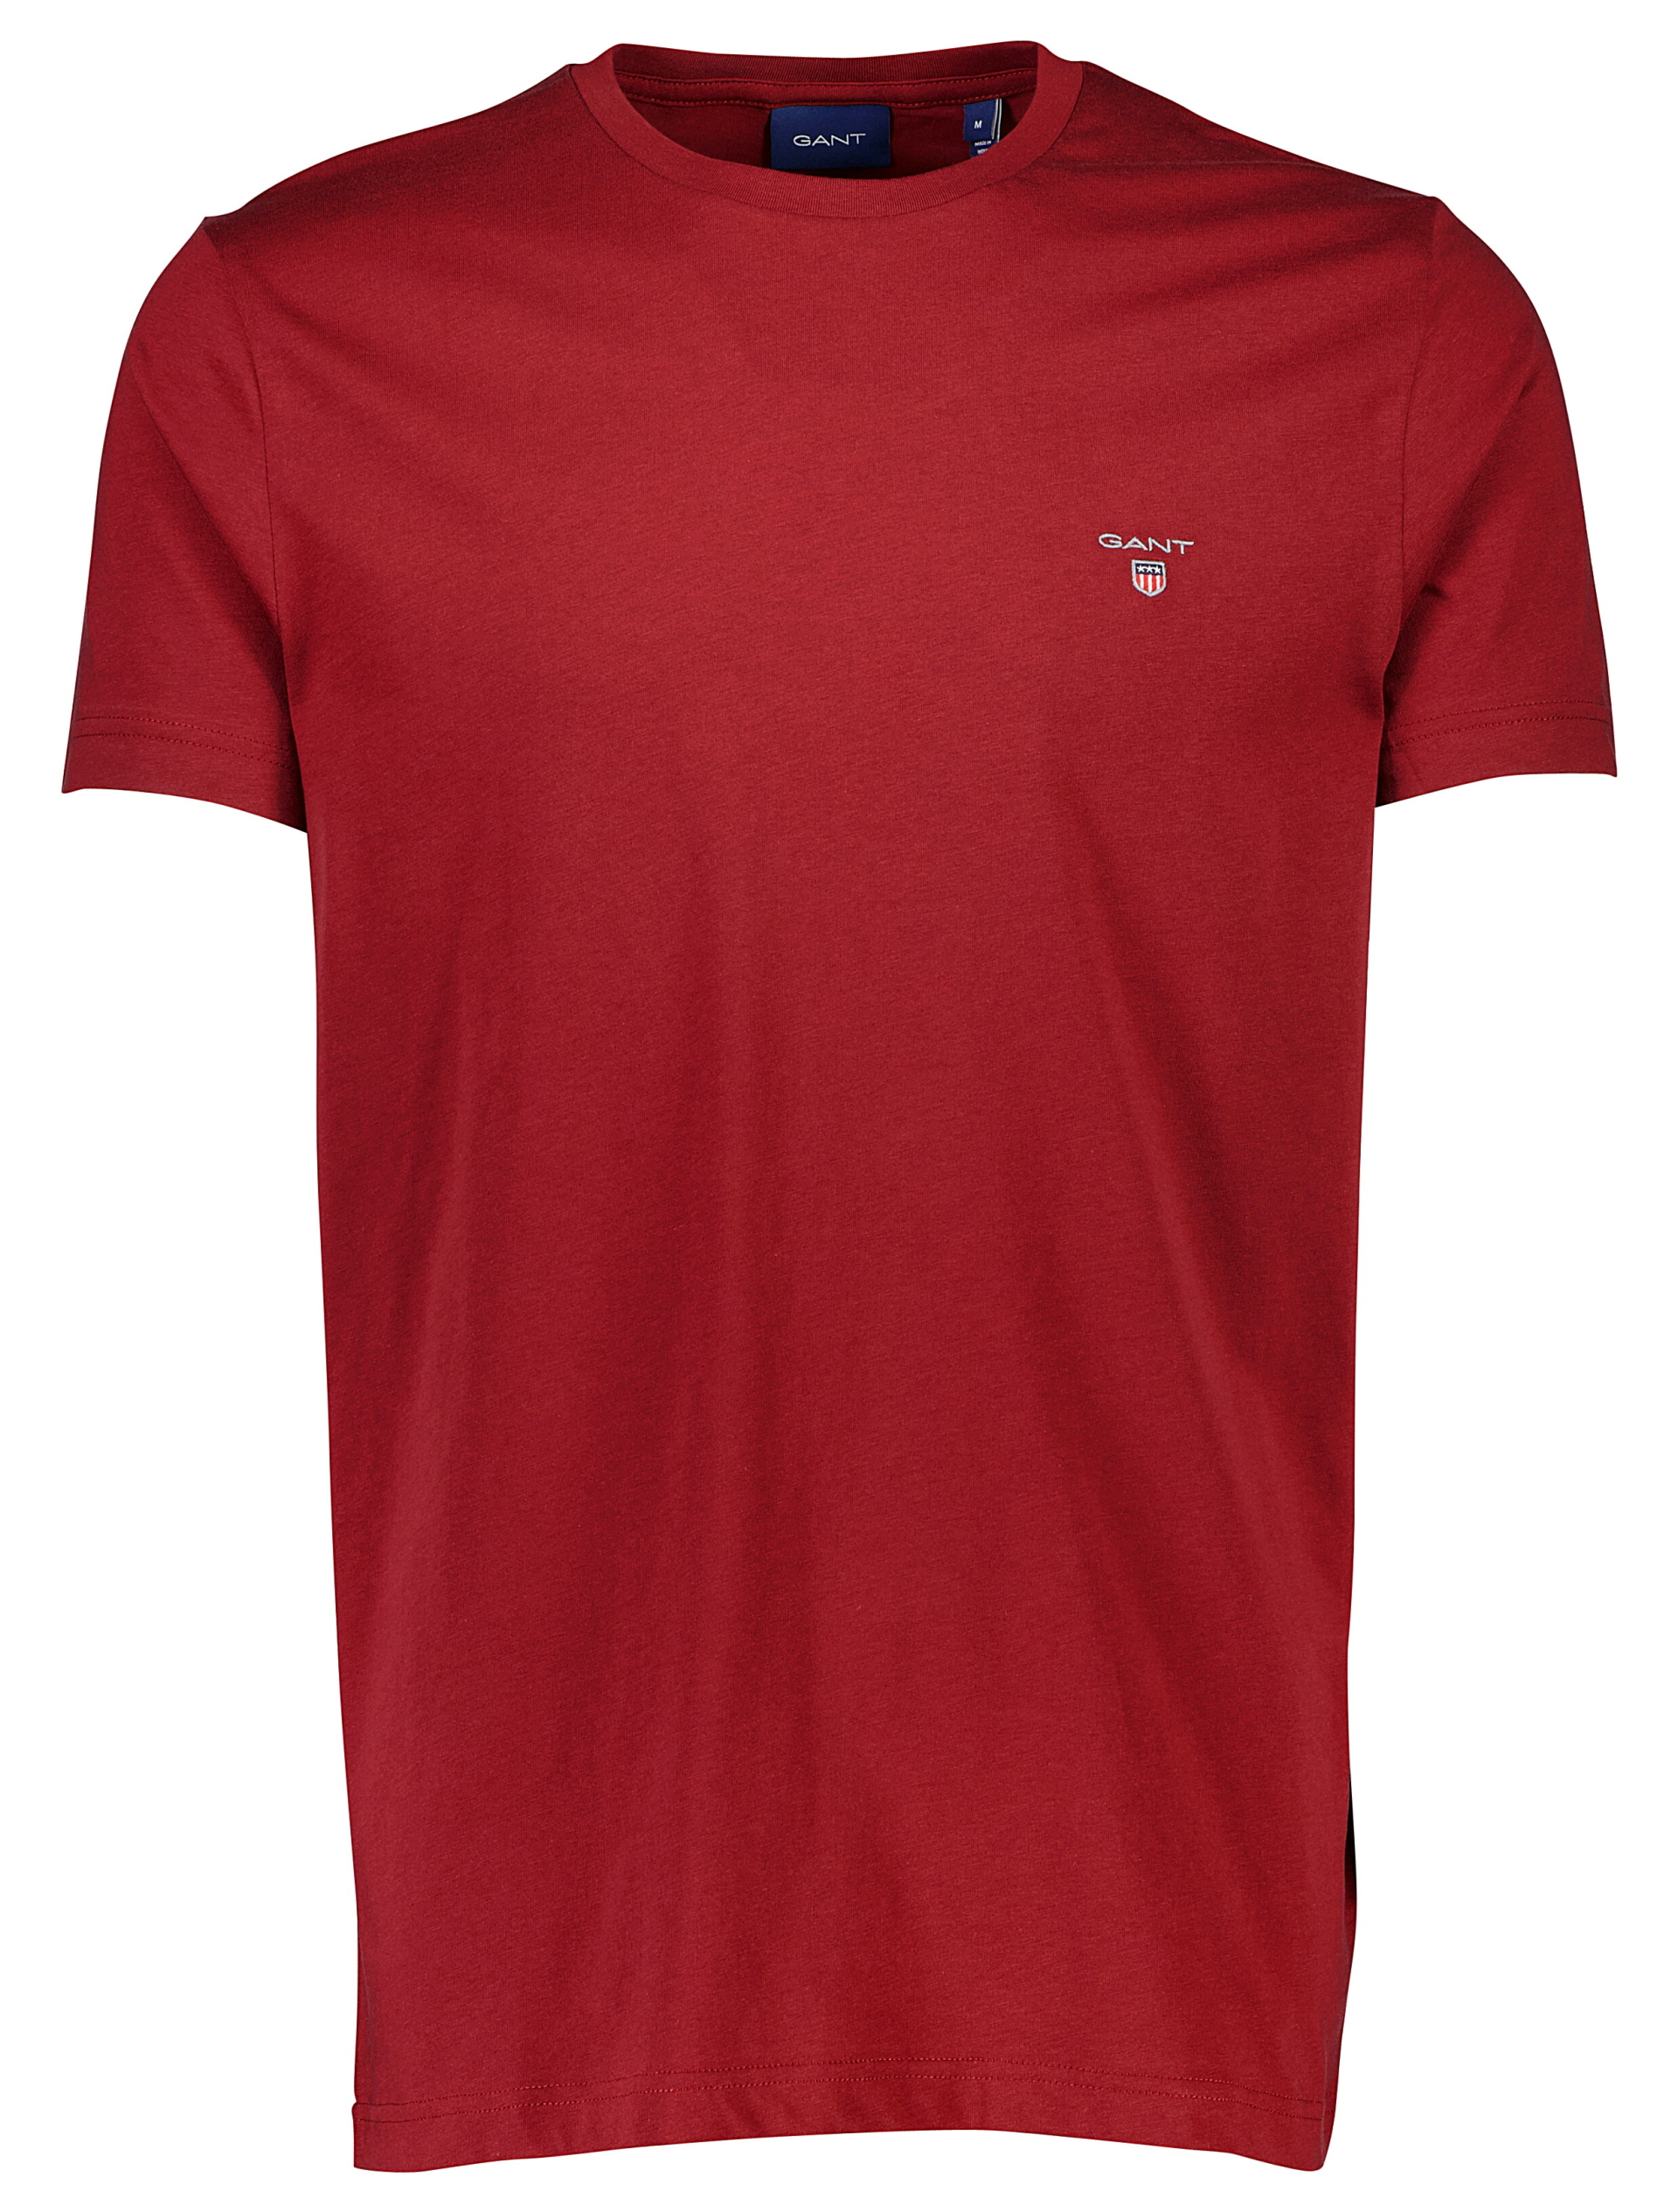 Gant T-shirt rød / 604 cabernet red